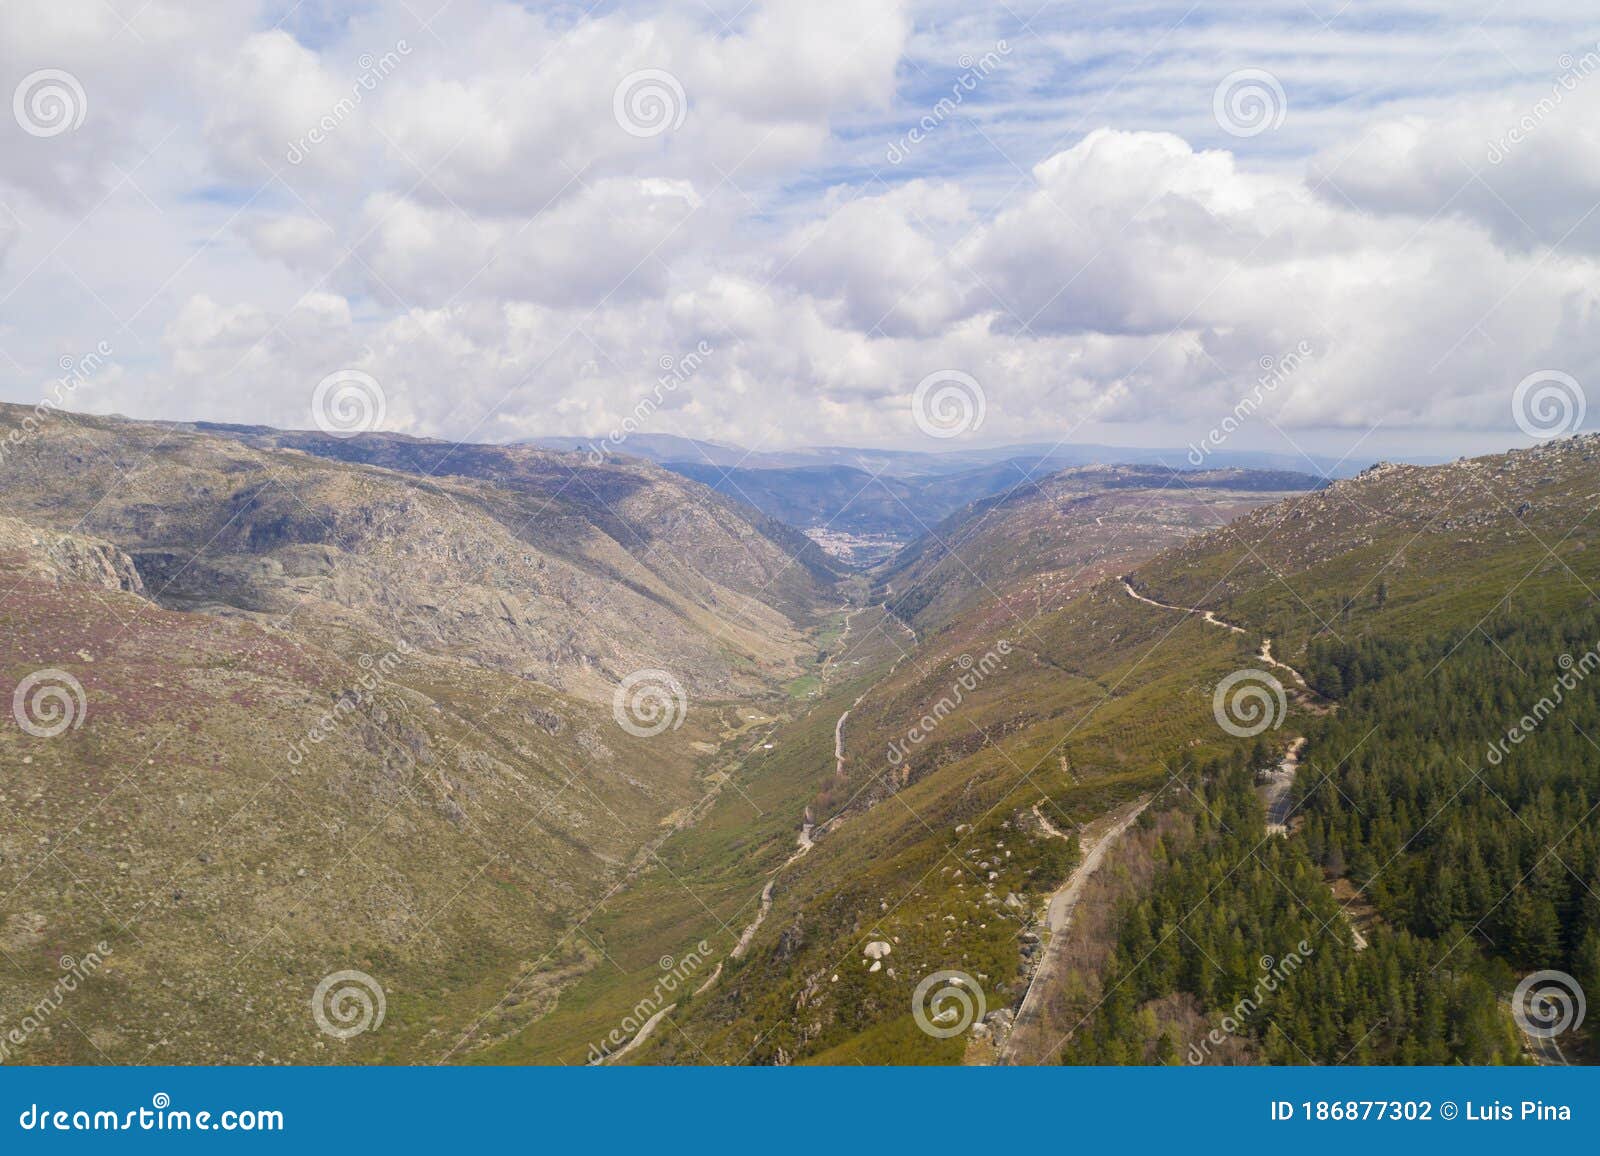 aerial drone view landscape of vale glaciar do zezere valley in serra estrela, portugal